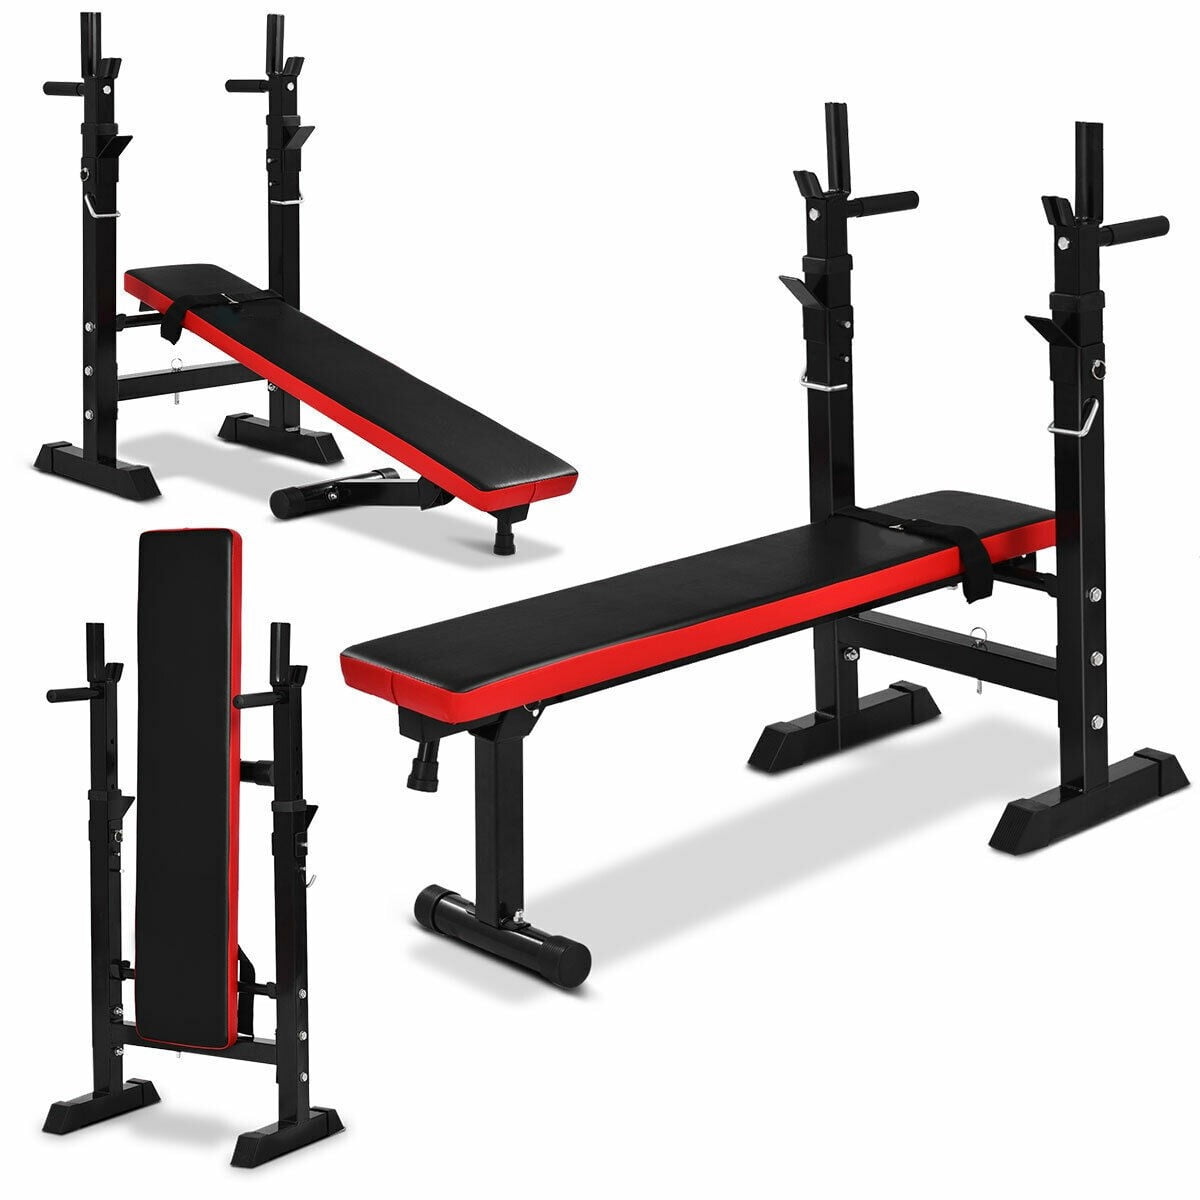 HOMCOM Foldable Exercise Bench 6 Levels Adjustment - Black/Red